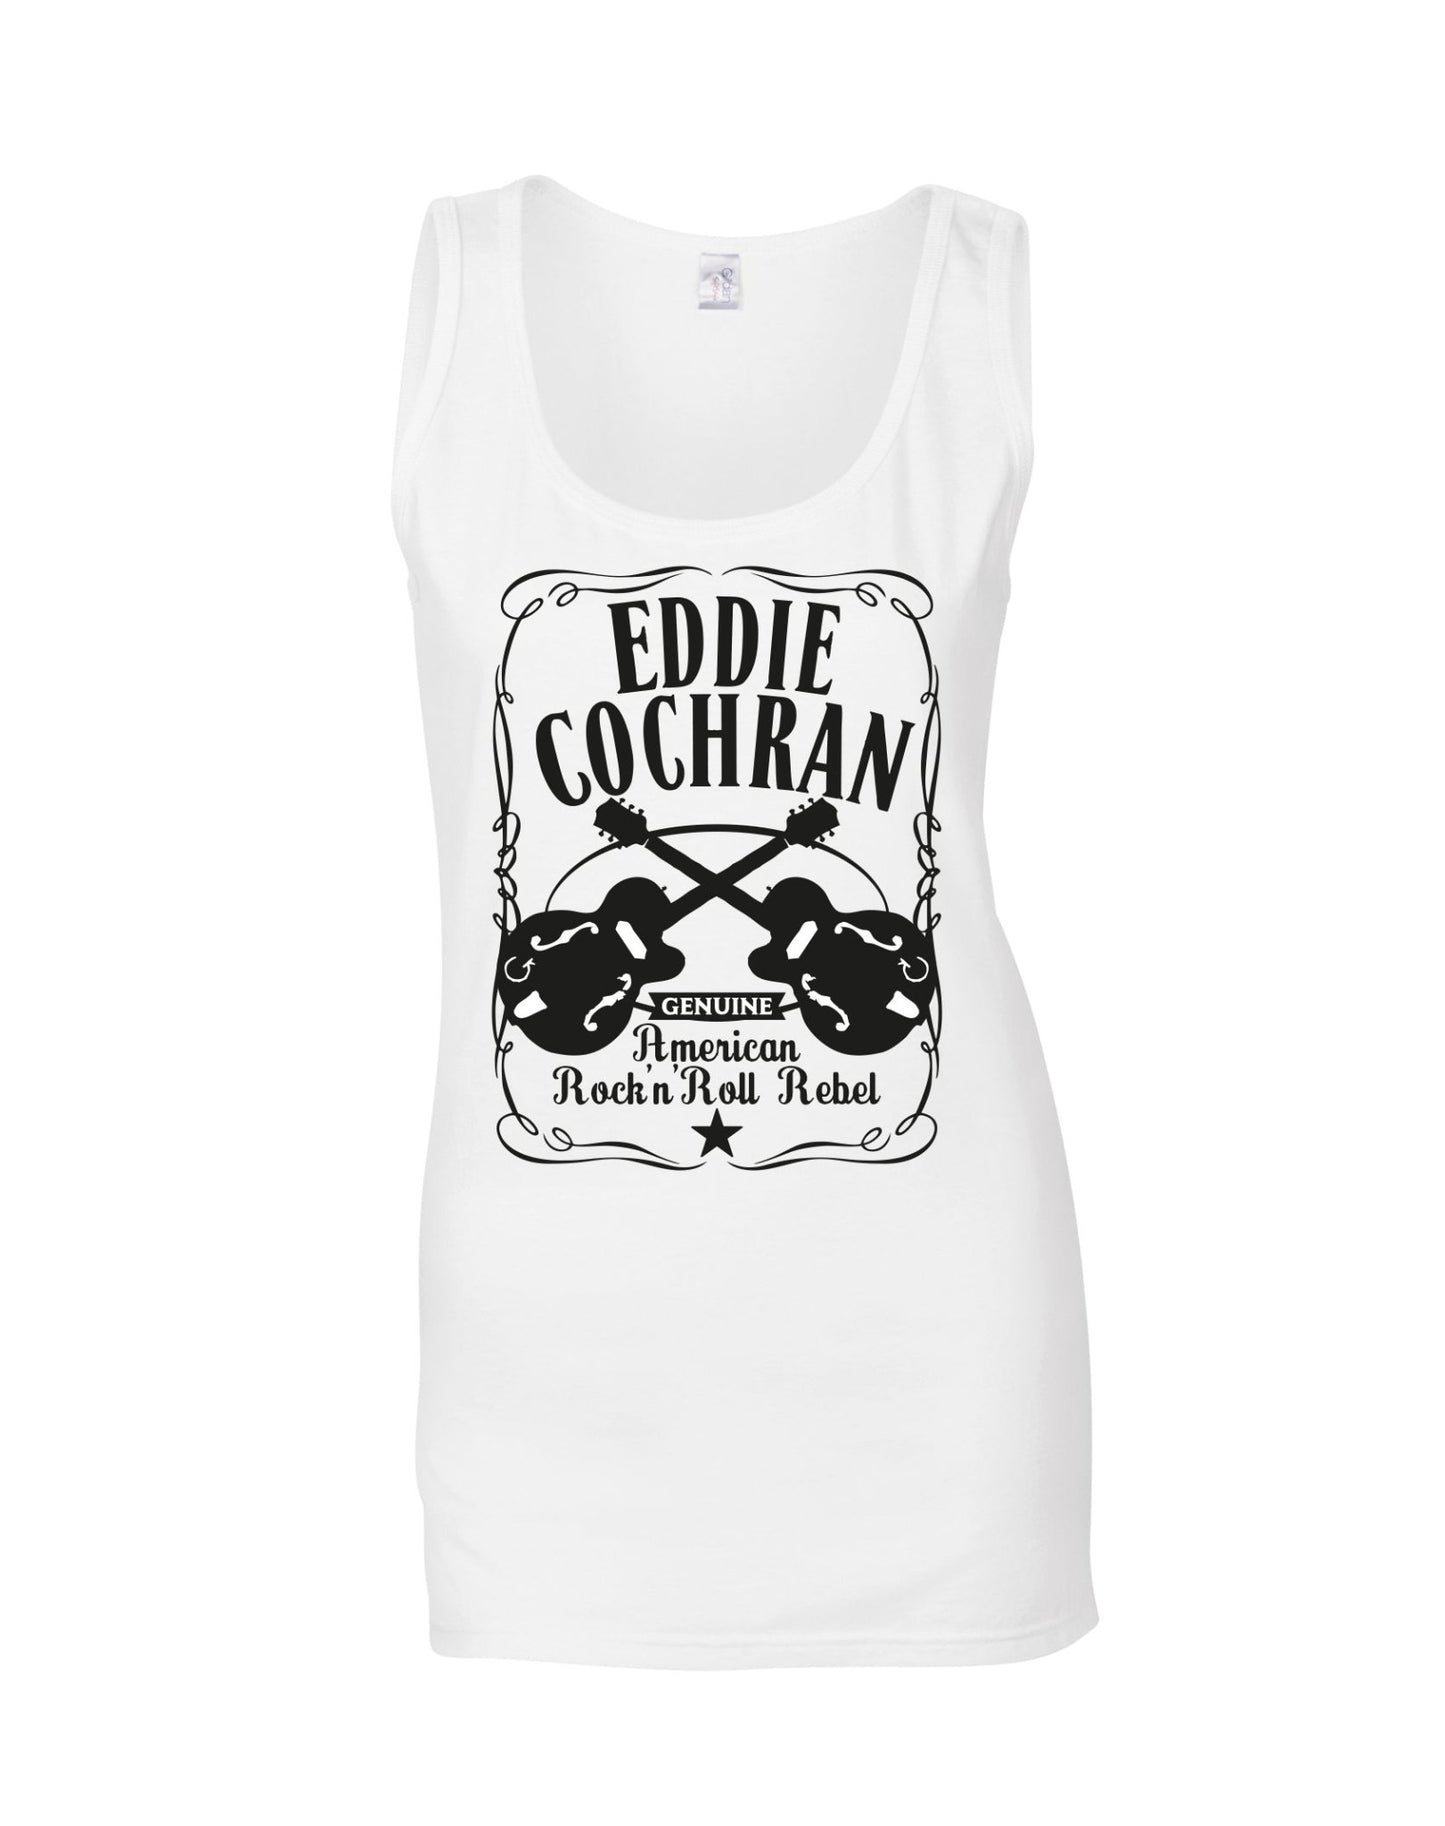 Eddie Cochran - cross Gretsch guitars - ladies fit vest - various colours - Dirty Stop Outs